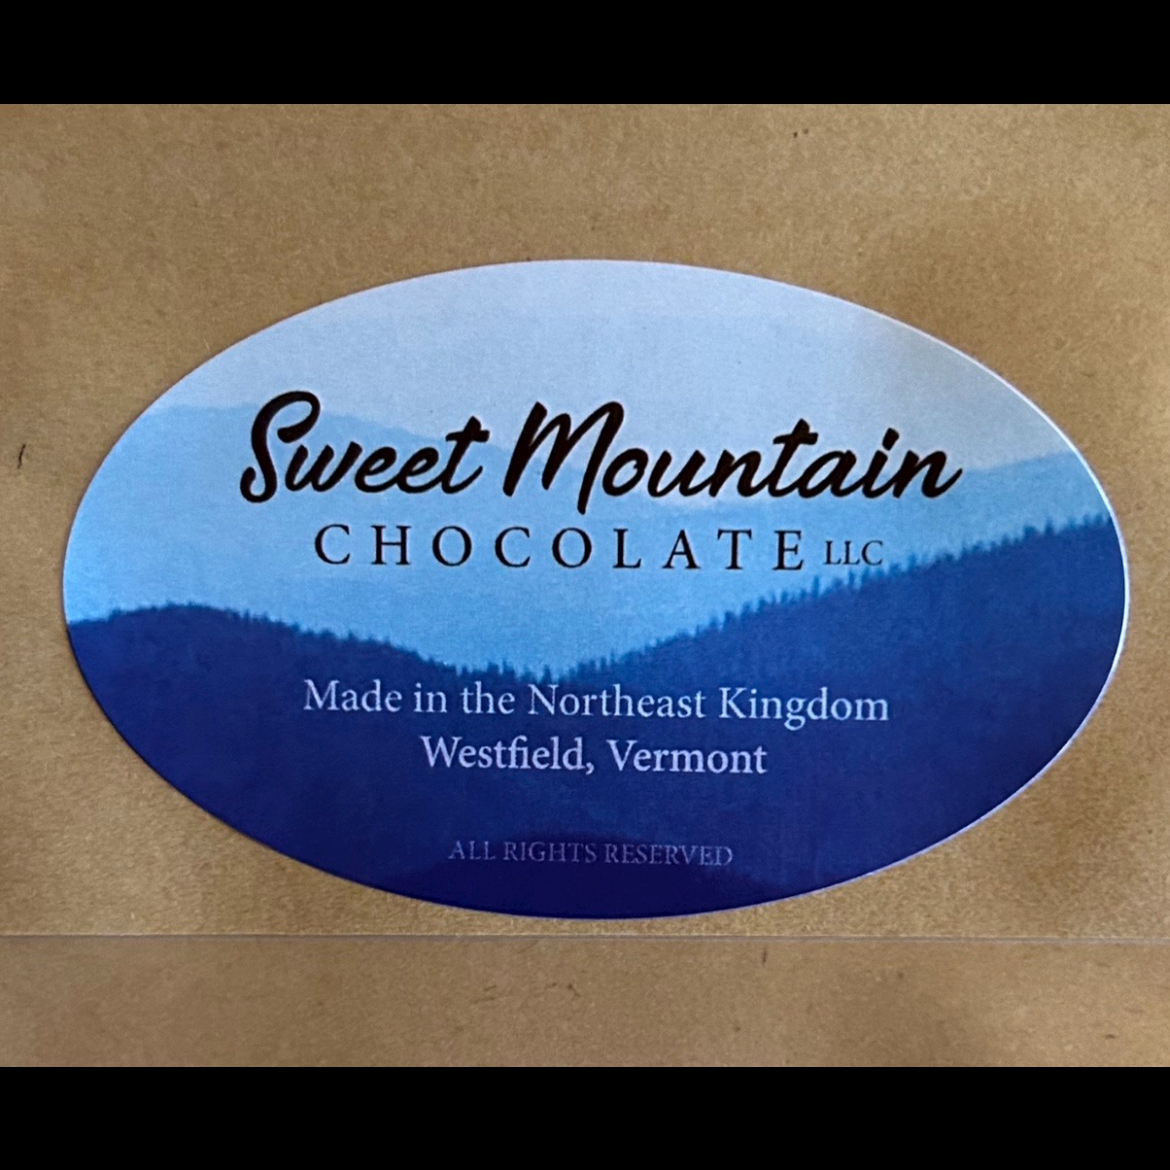 Sweet Mountain Chocolate LLC